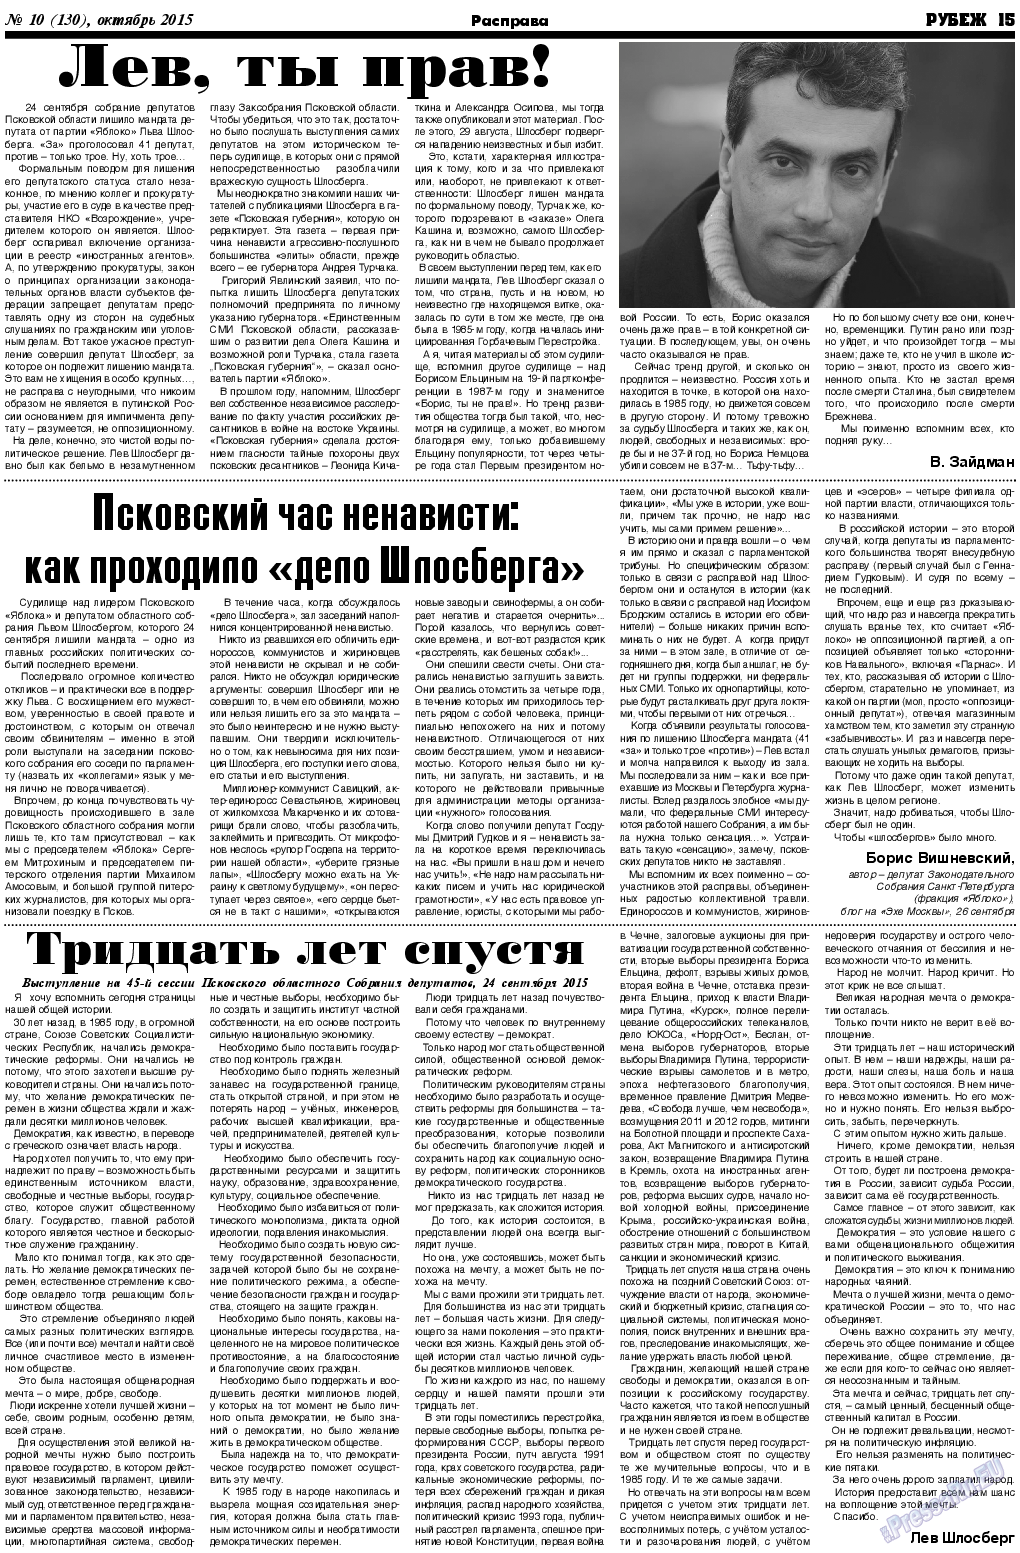 Рубеж, газета. 2015 №10 стр.15